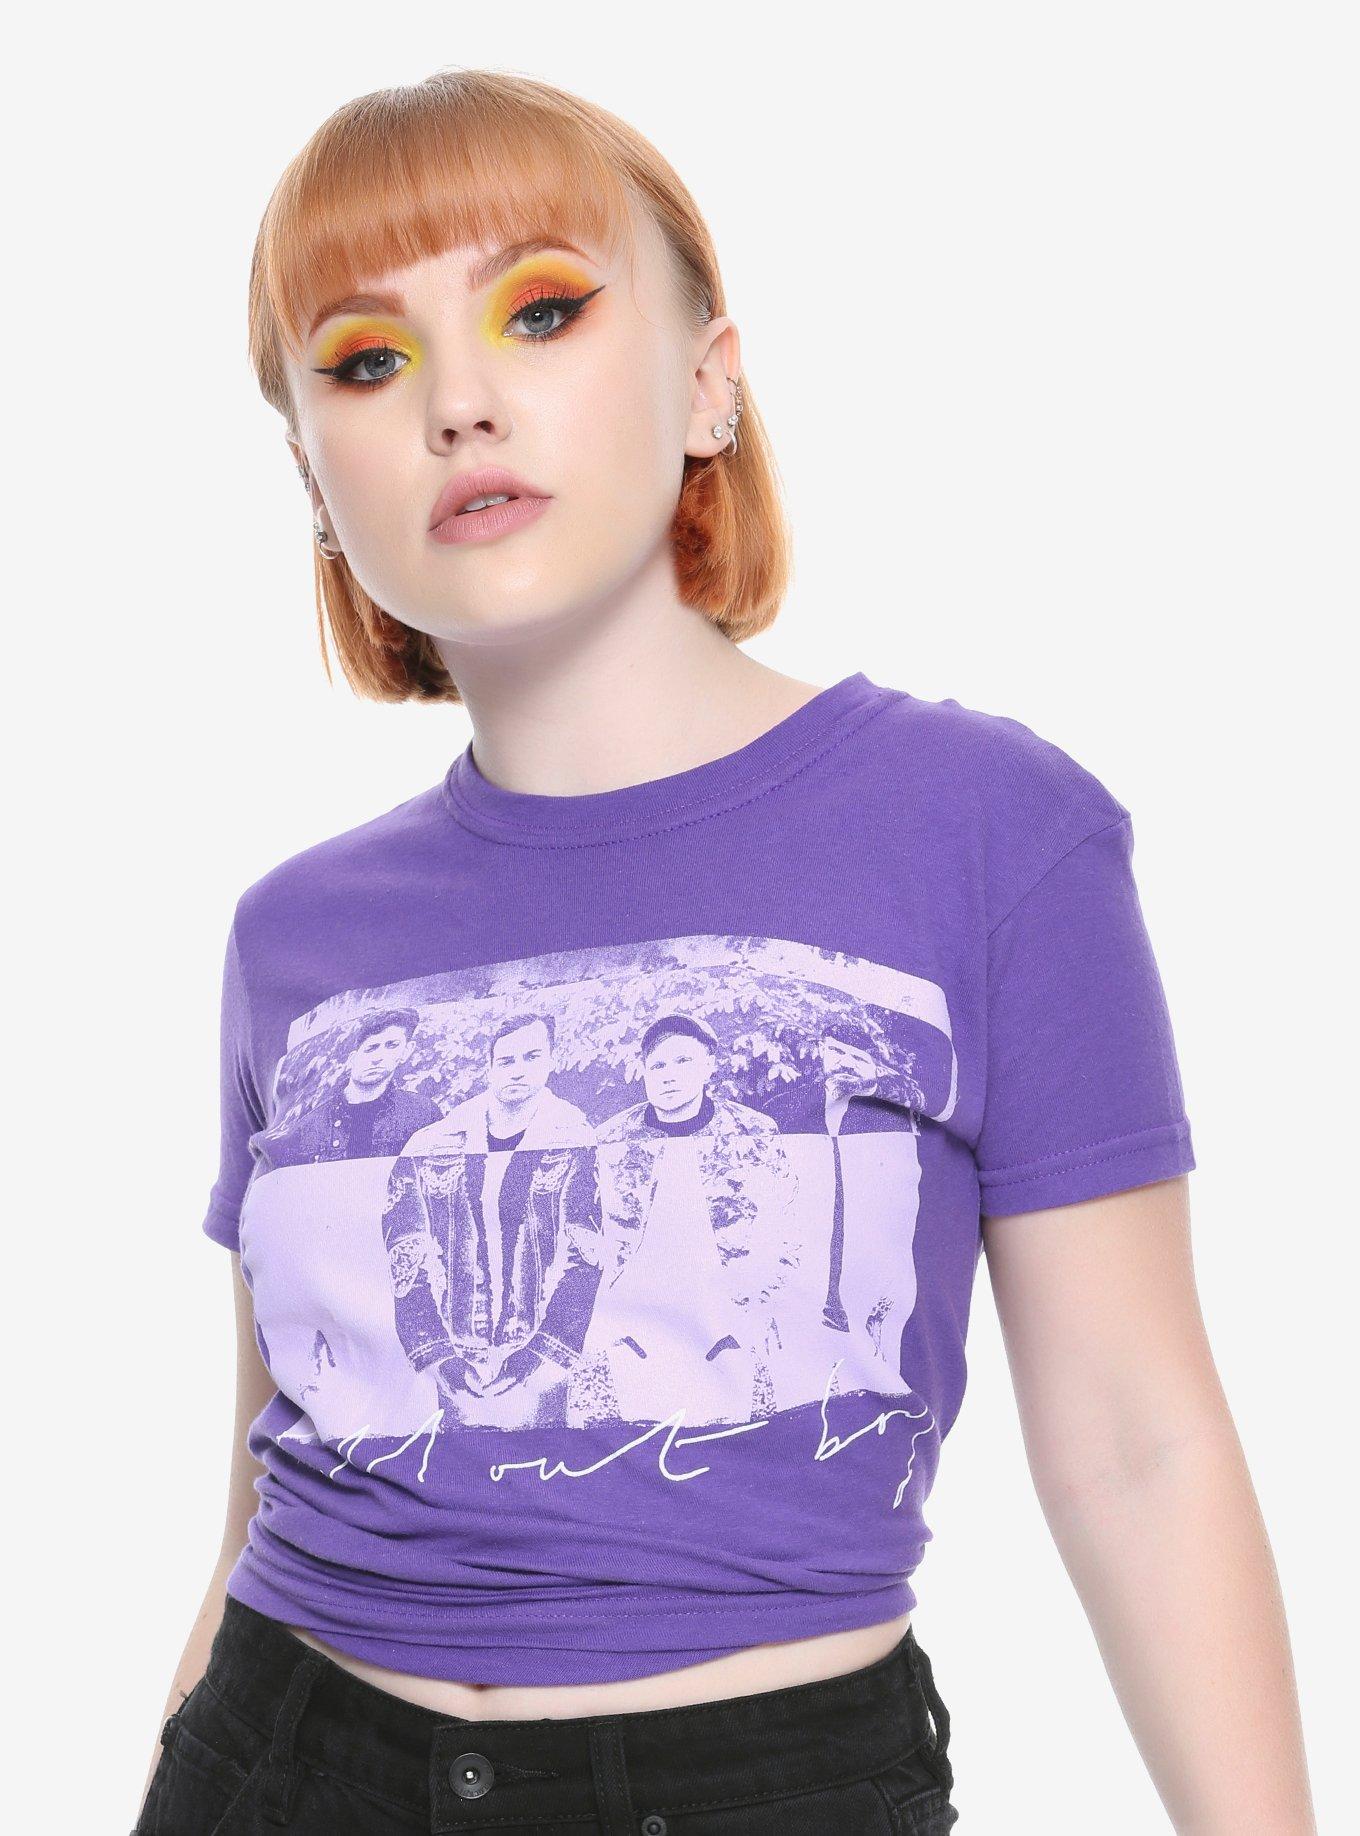 Fall Out Boy Scribble Photo Girls T-Shirt, PURPLE, hi-res